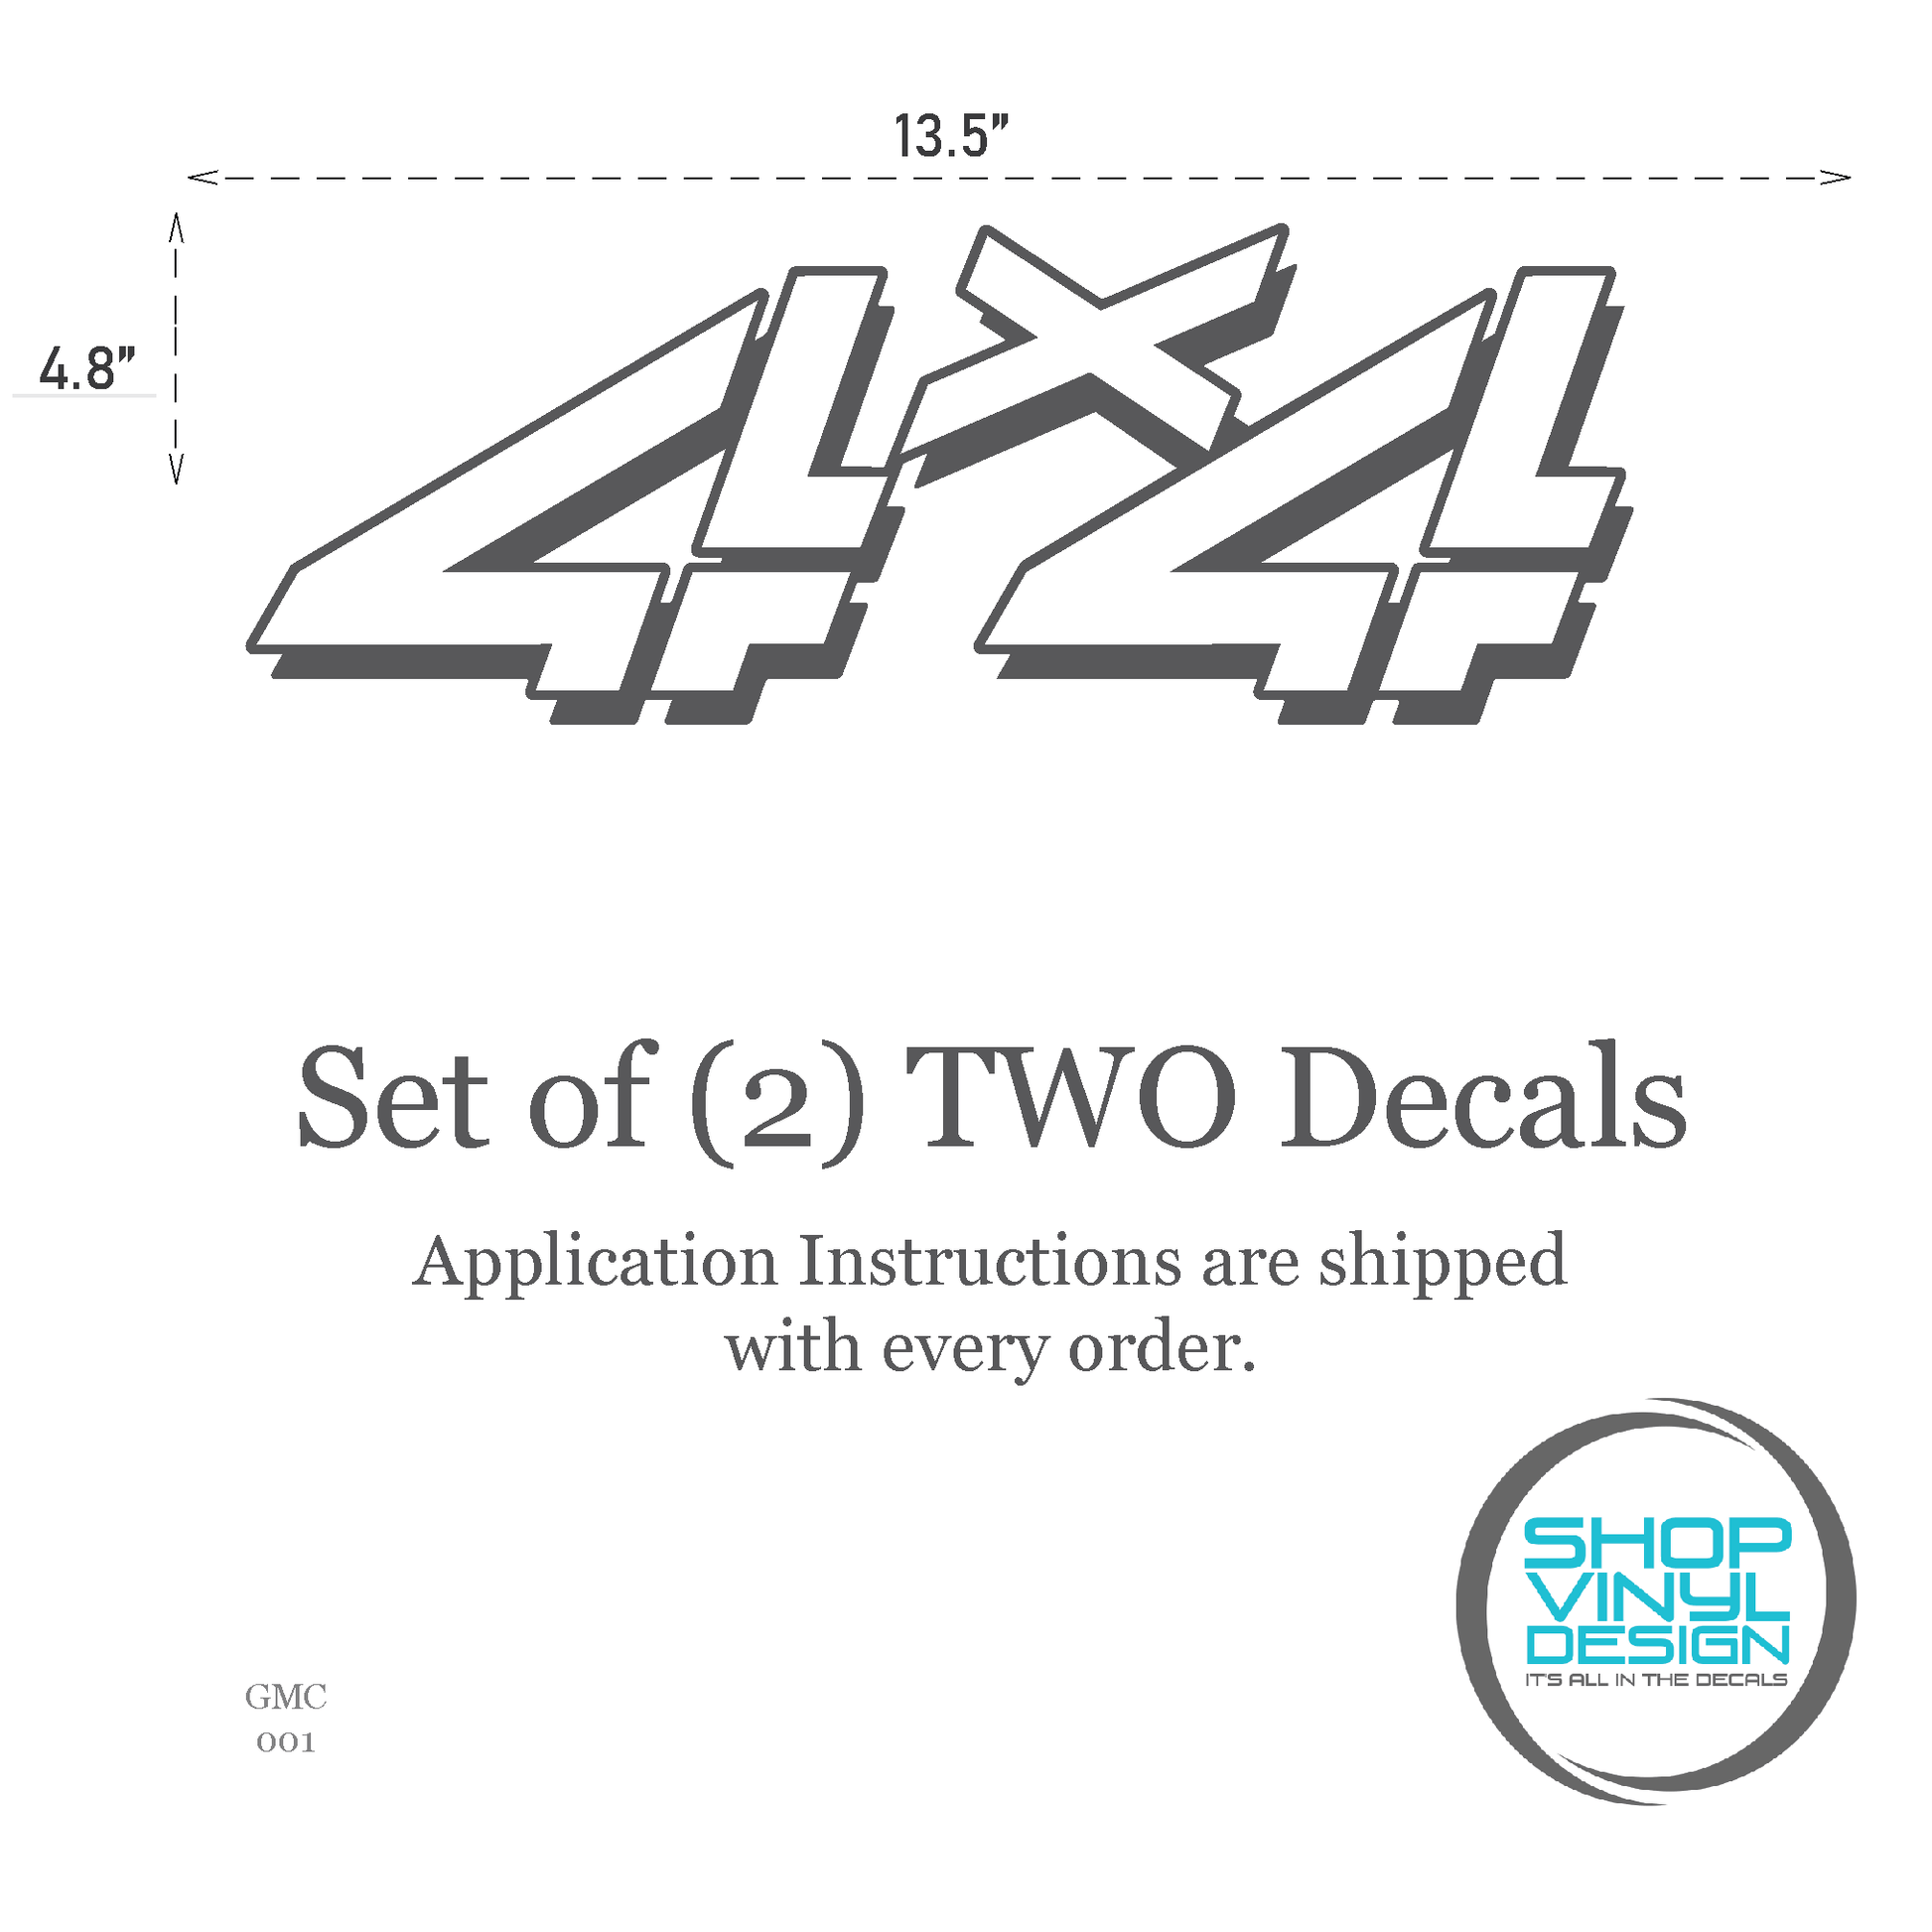 Shop Vinyl Design Sierra Trucks 4 x 4 Replacement Bedside Decals #G001 Vehicle 001 Shop Vinyl Design decals stickers